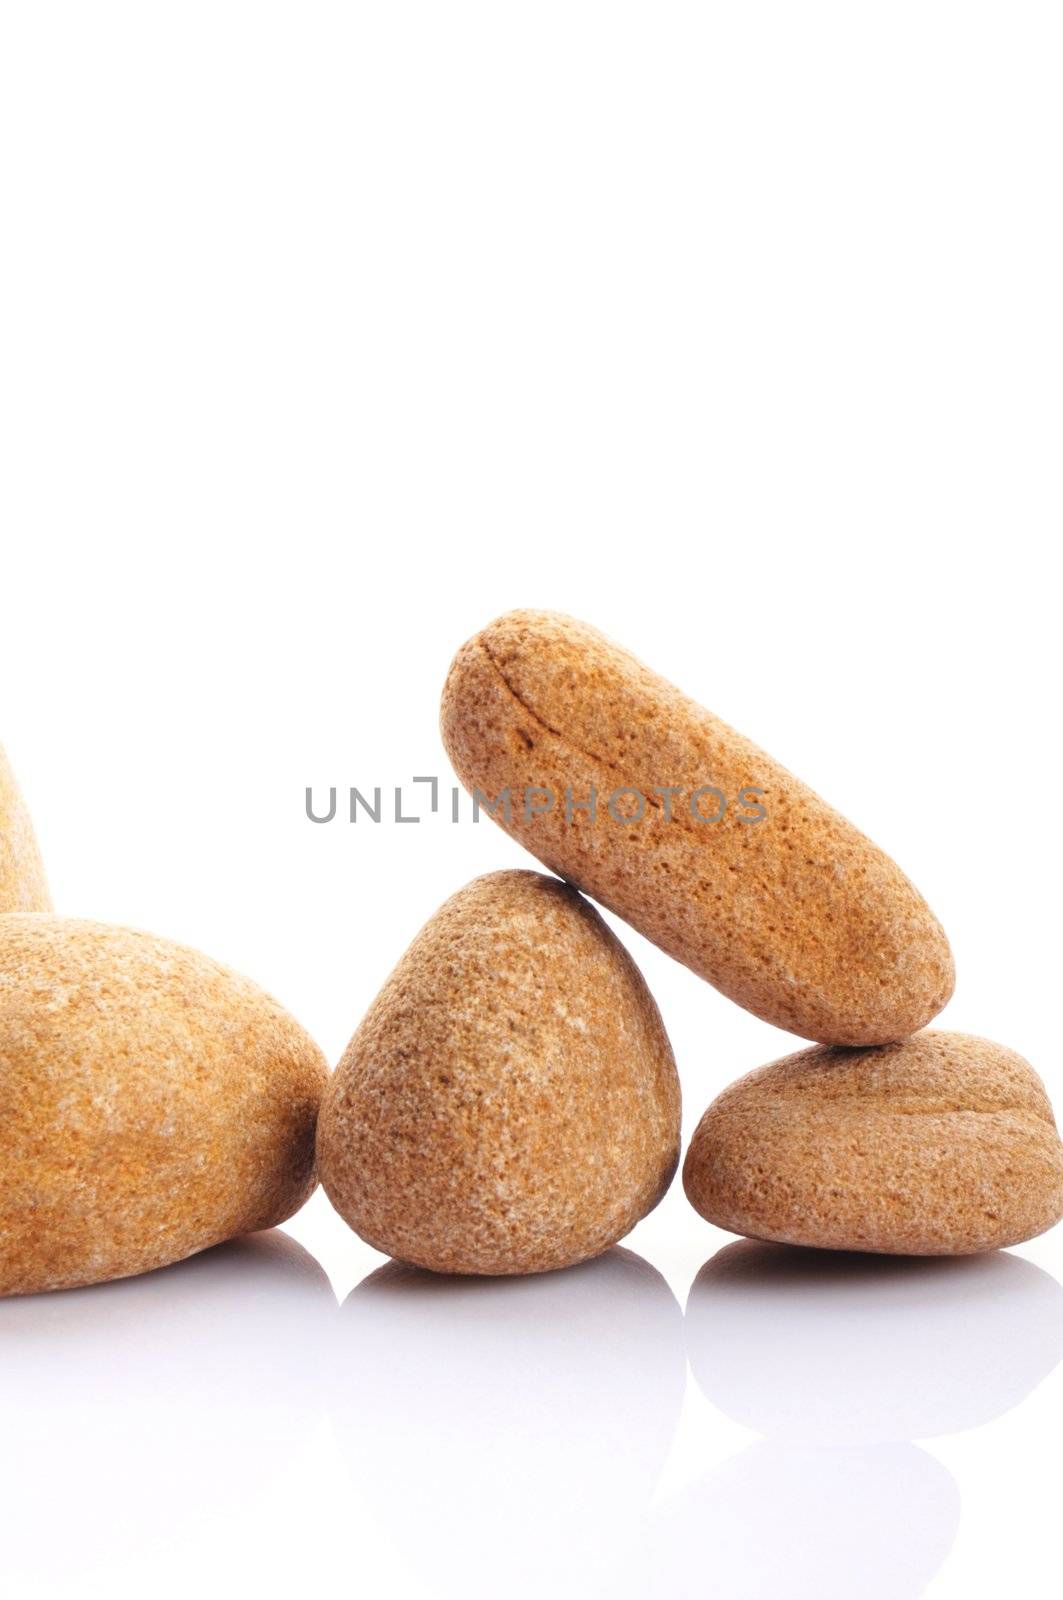 zen stones or pebbles isolated on white background